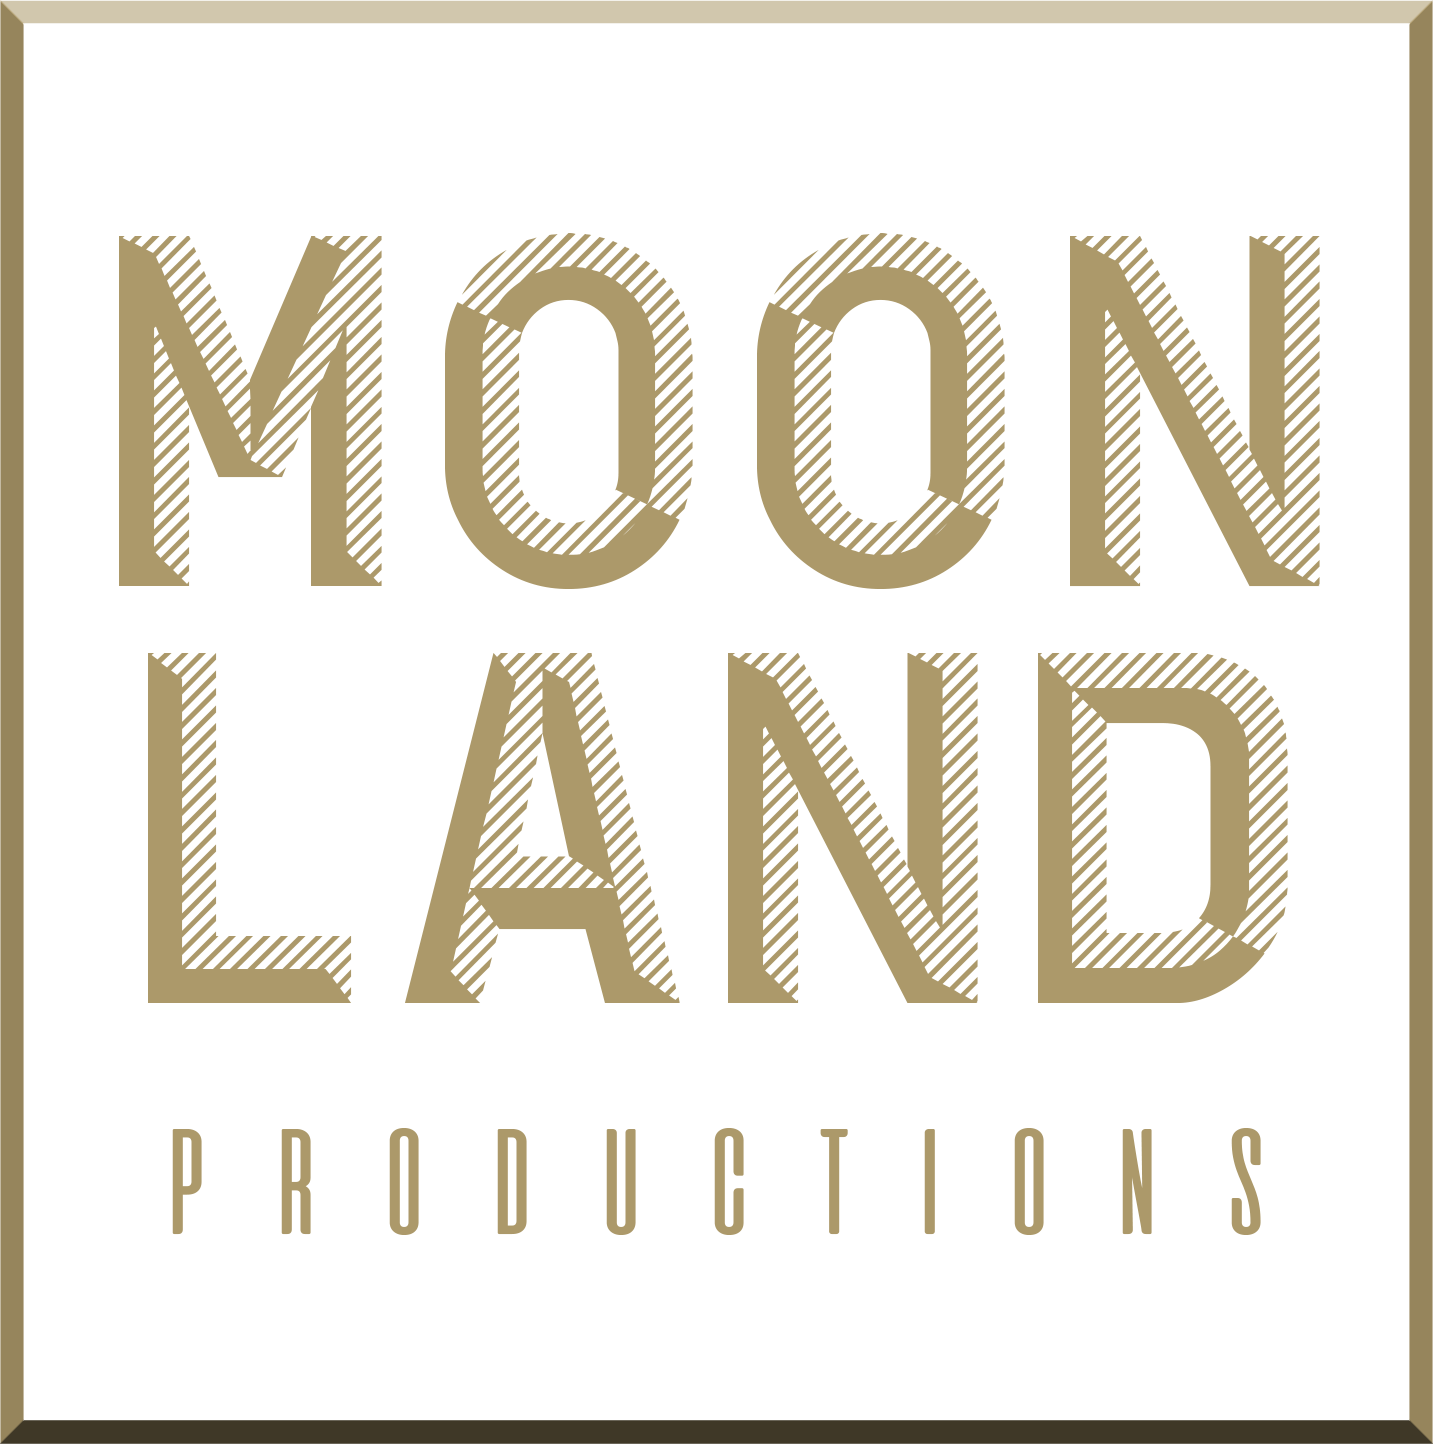 Moonland Productions